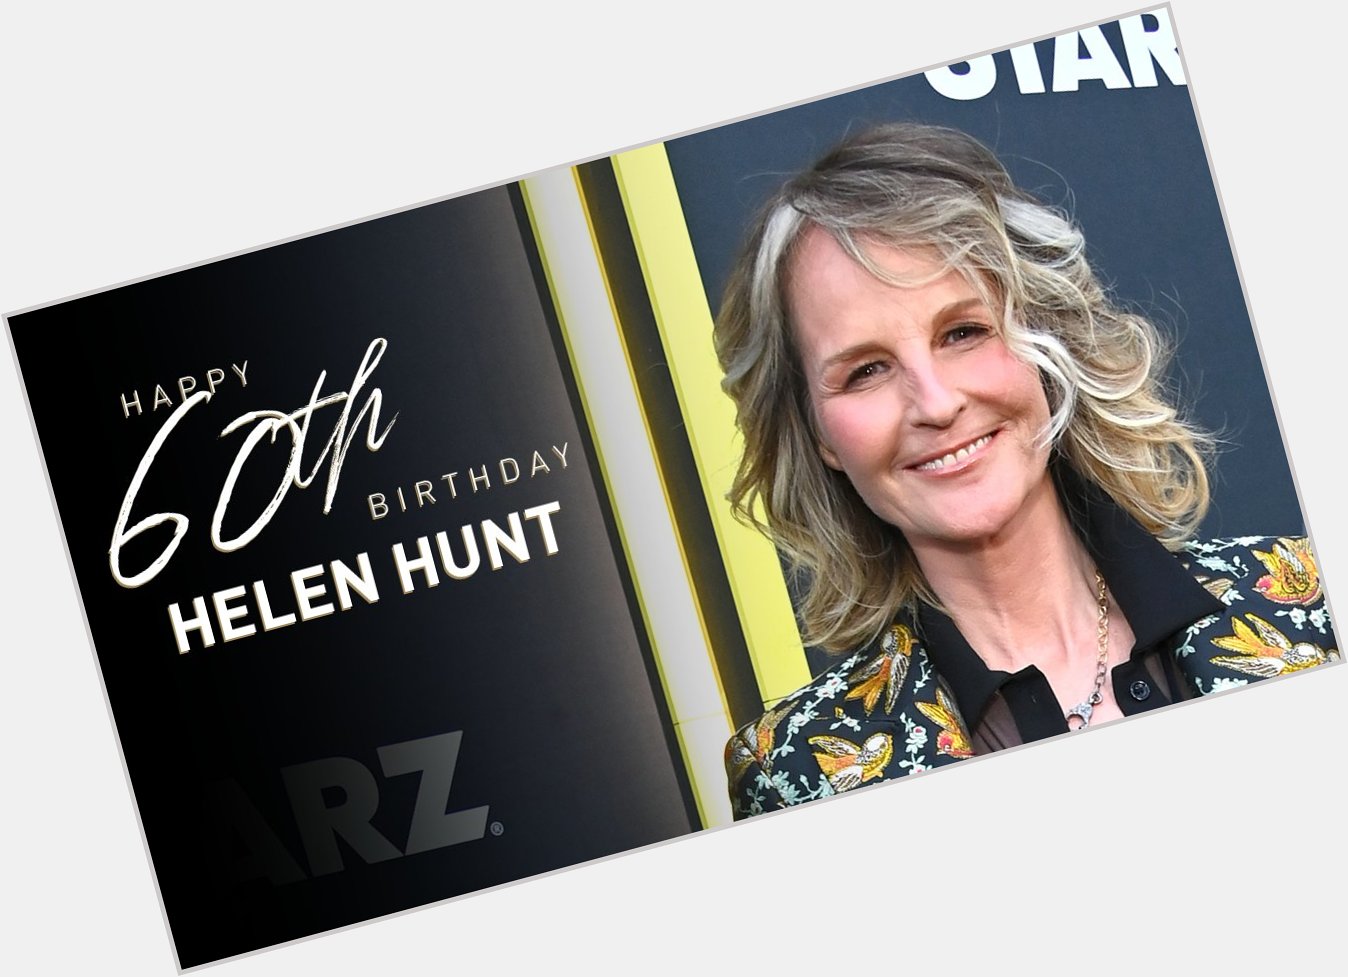 Happy 60th birthday Helen Hunt!

Read her bio here:  